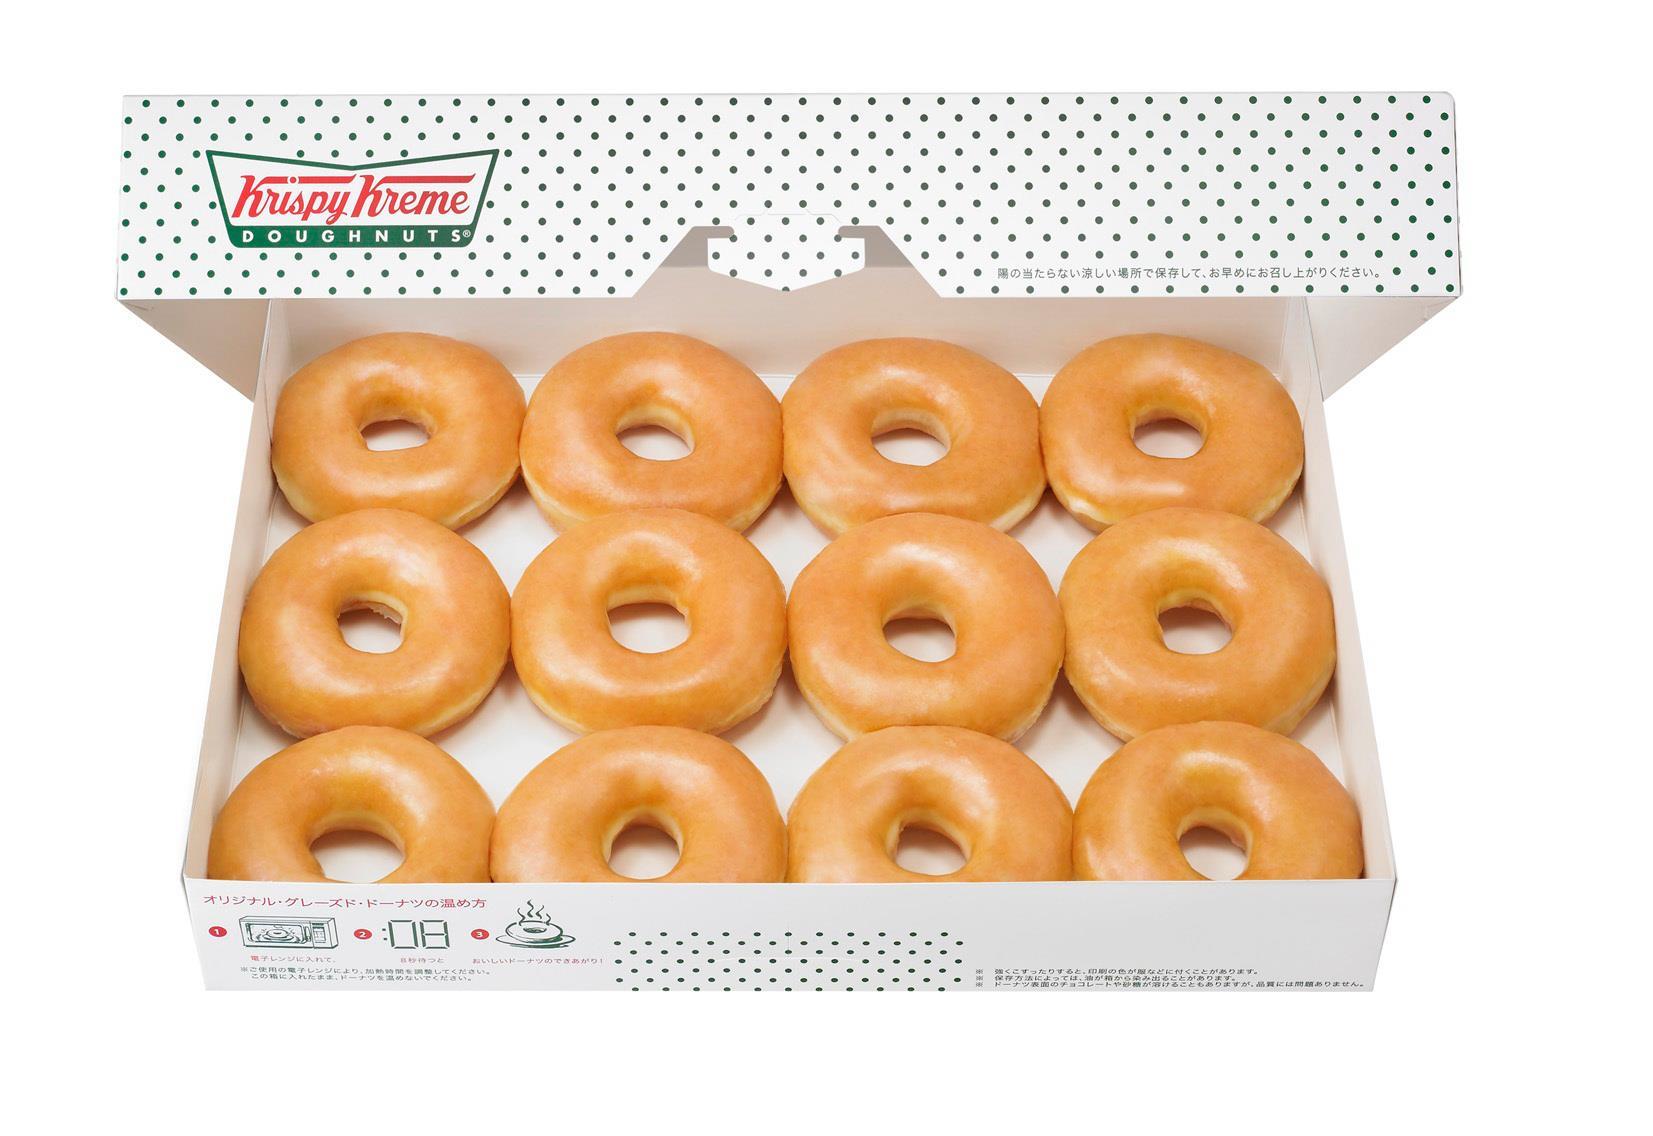 Hot News from Krispy Kreme Doughnuts